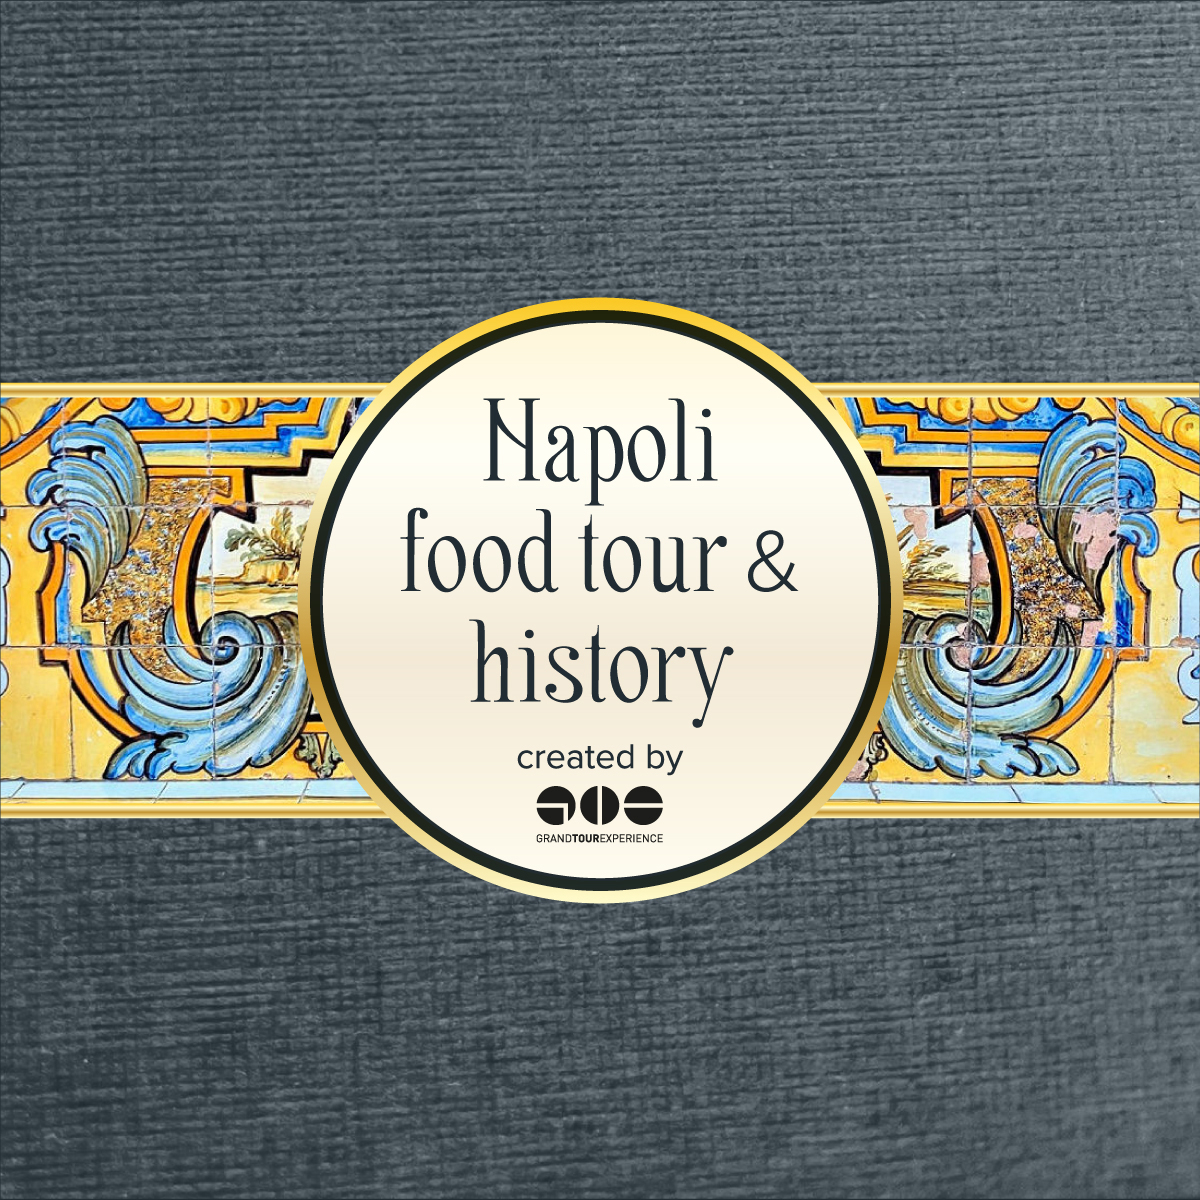 Naples Food Tour: between History & Food